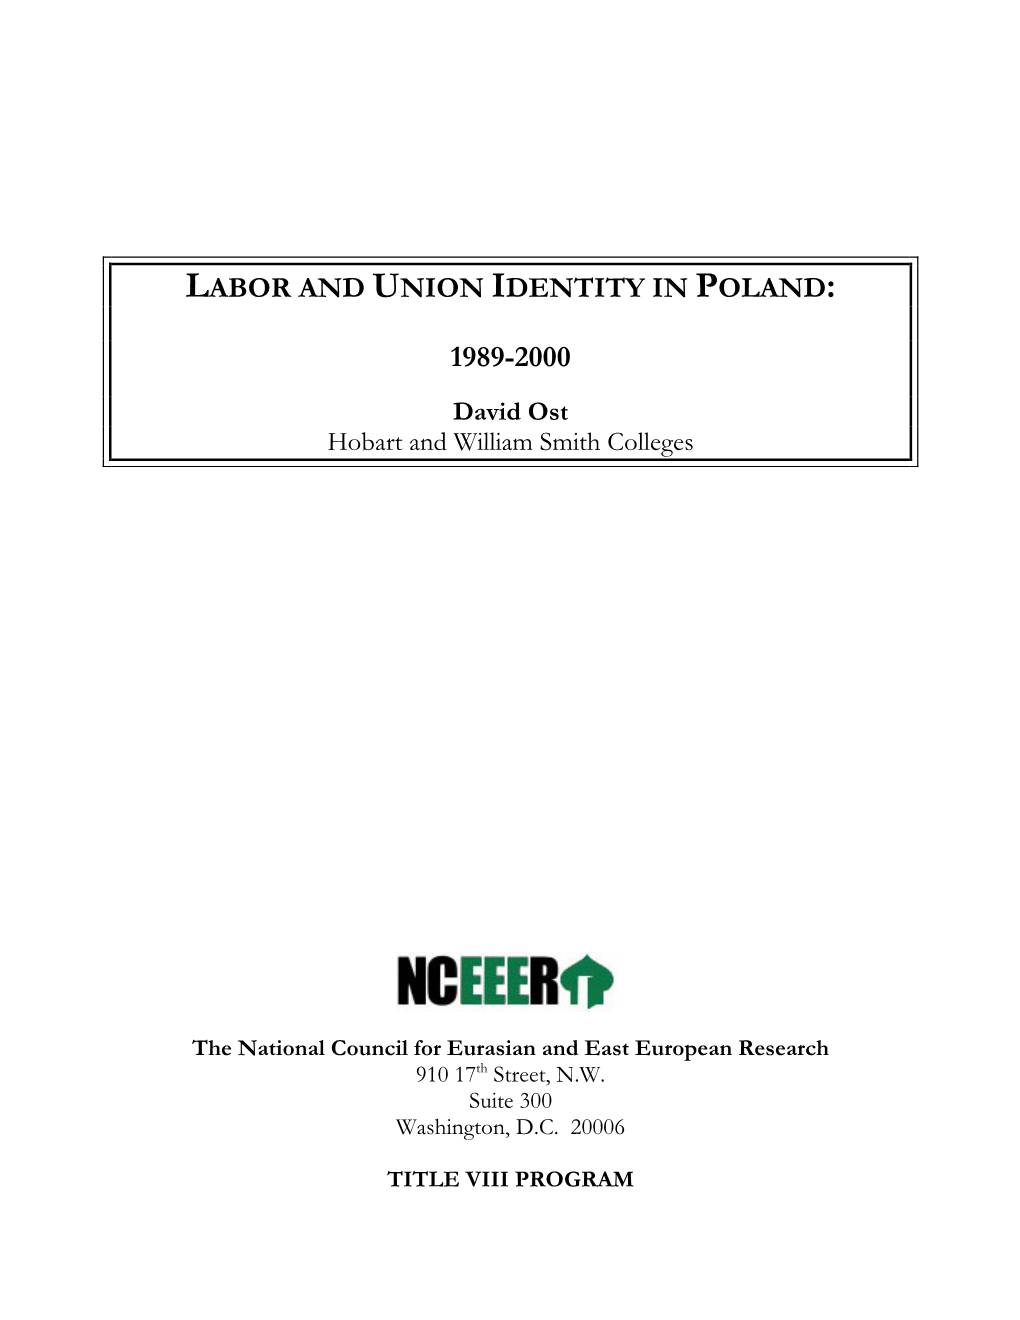 Labor and Union Identity in Poland: 1989-2000